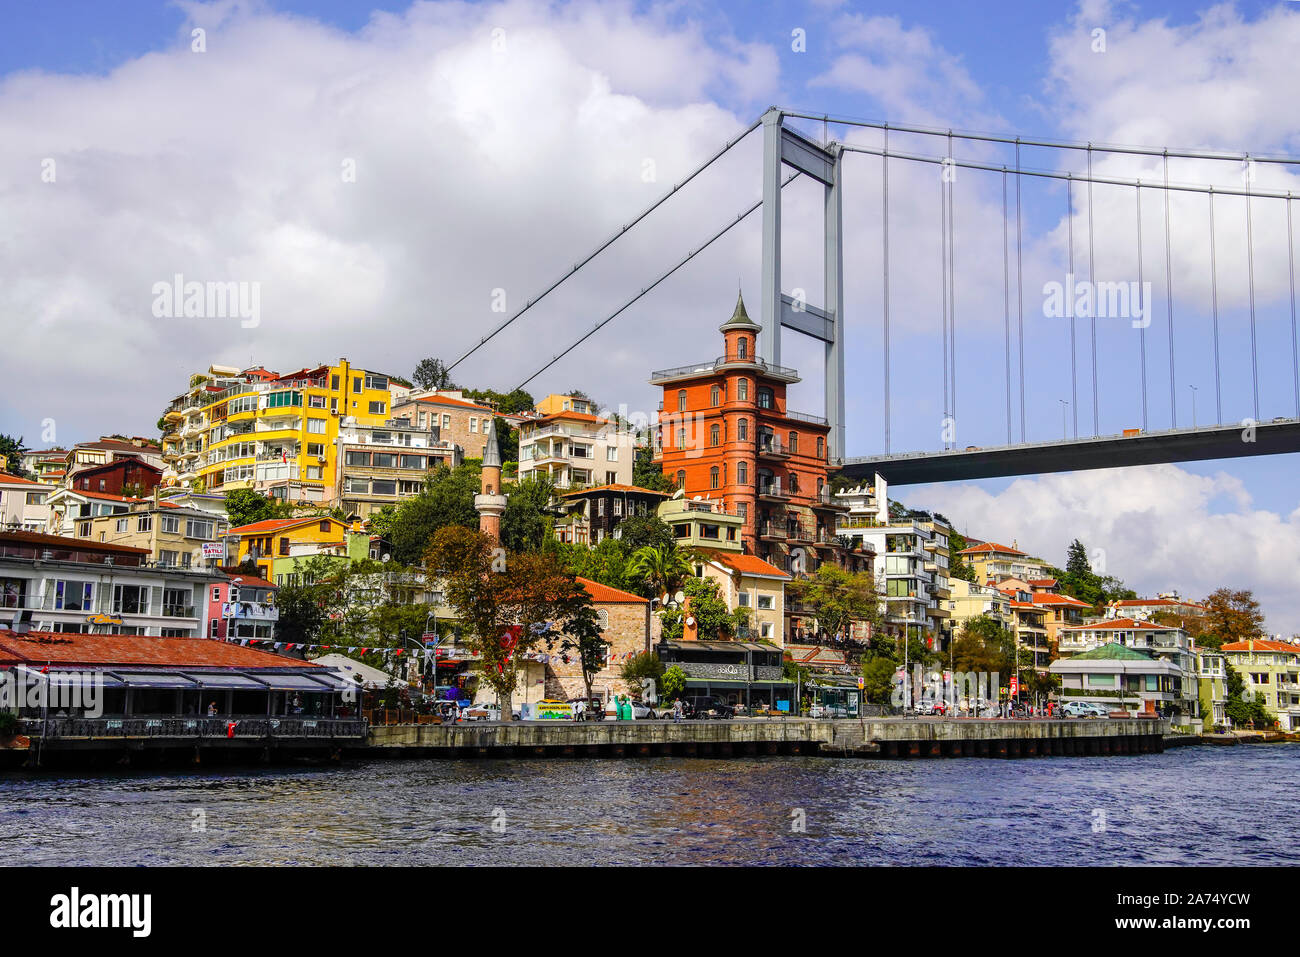 Borusan Holding house by Bosphorus Bridge connecting Europe and Asia. Istanbul, Turkey. Stock Photo